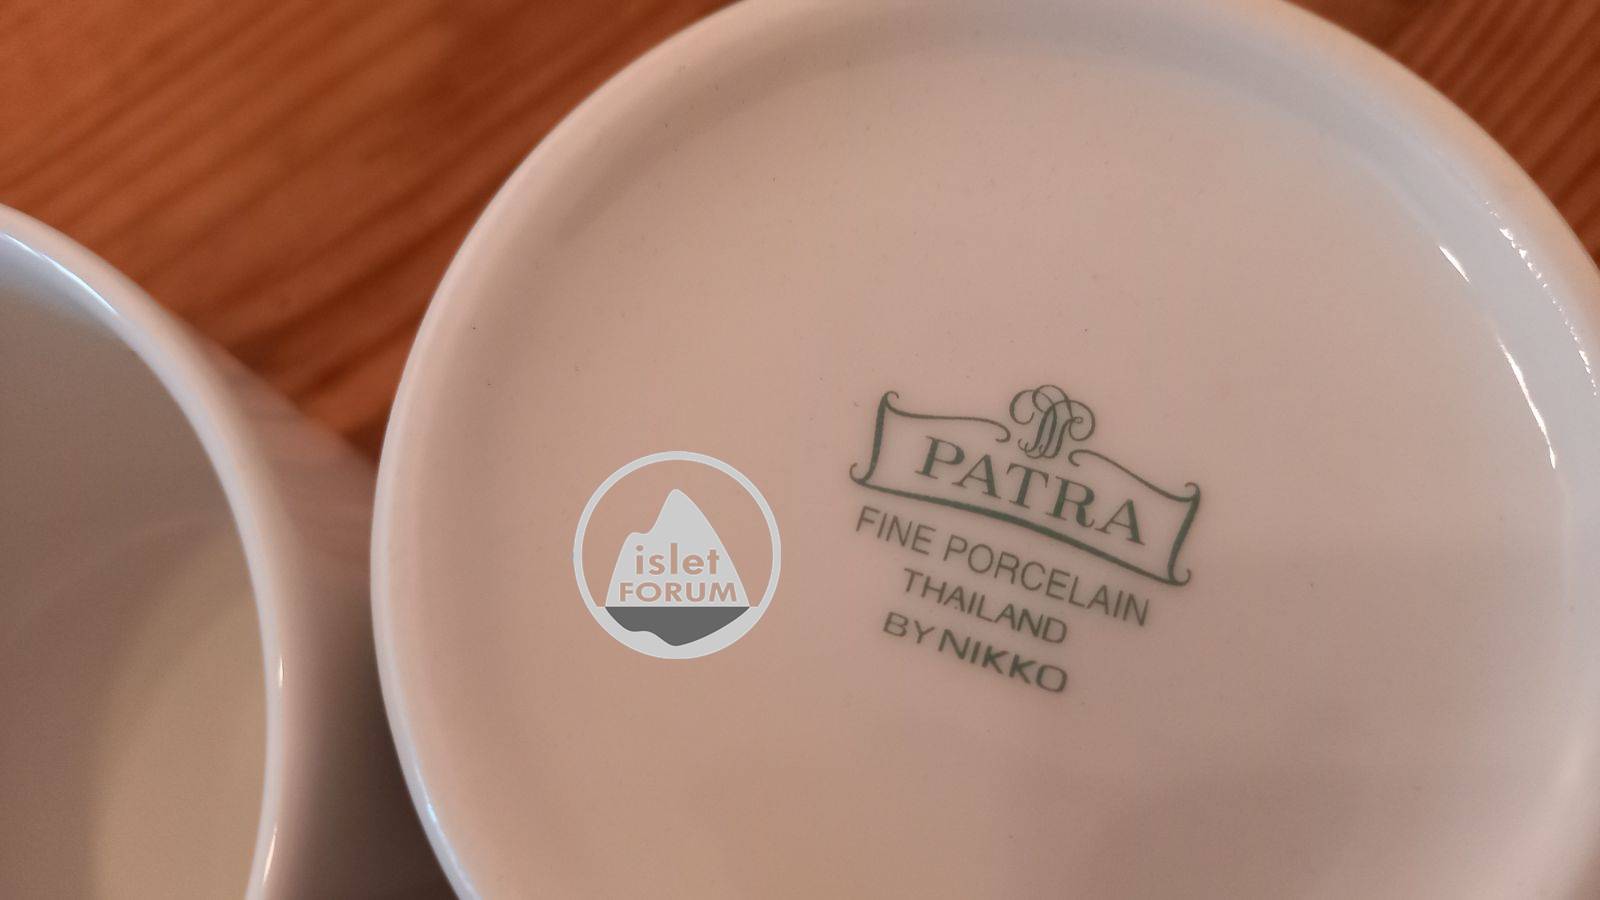 泰國patra porcelain by nikko白色杯 (2).jpg